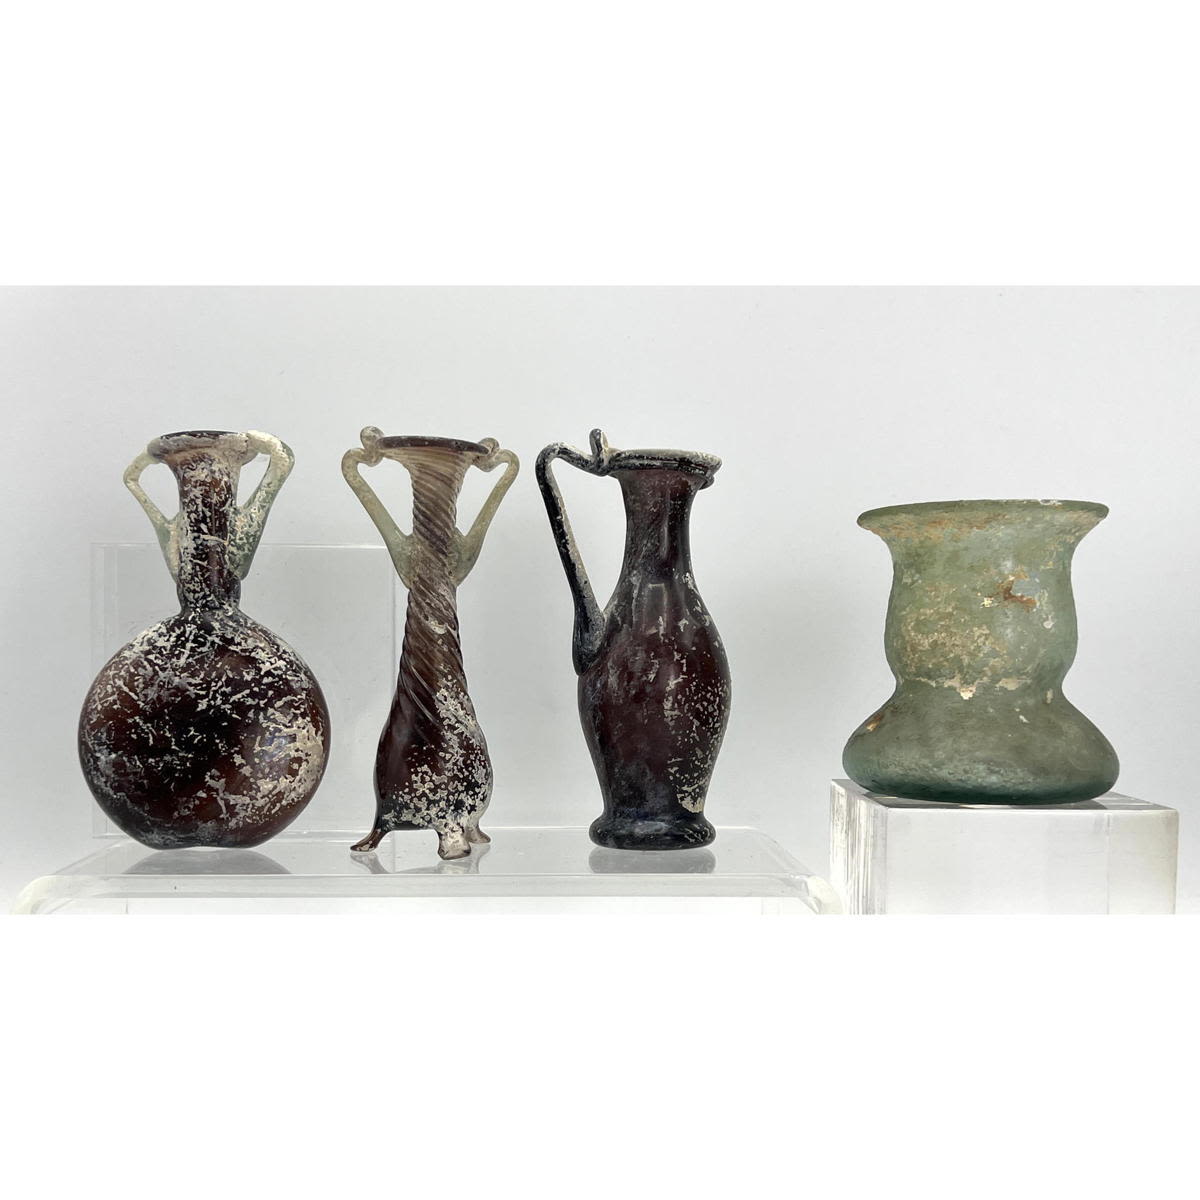 4 pc lot Ancient Roman glass. 3